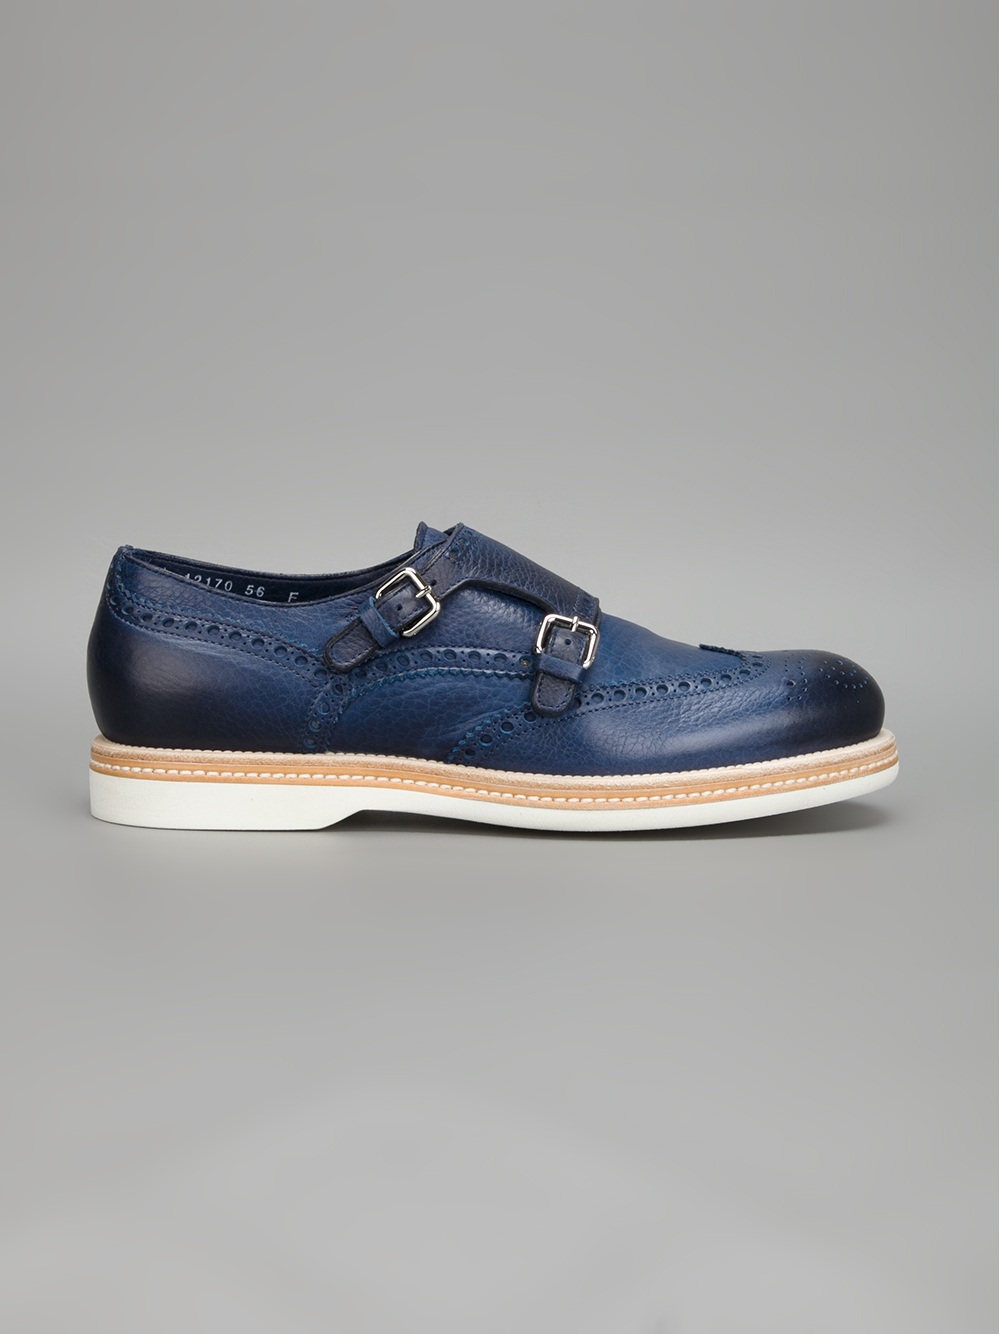 Lyst - Santoni Brogue Detail Monk Strap Shoe in Blue for Men